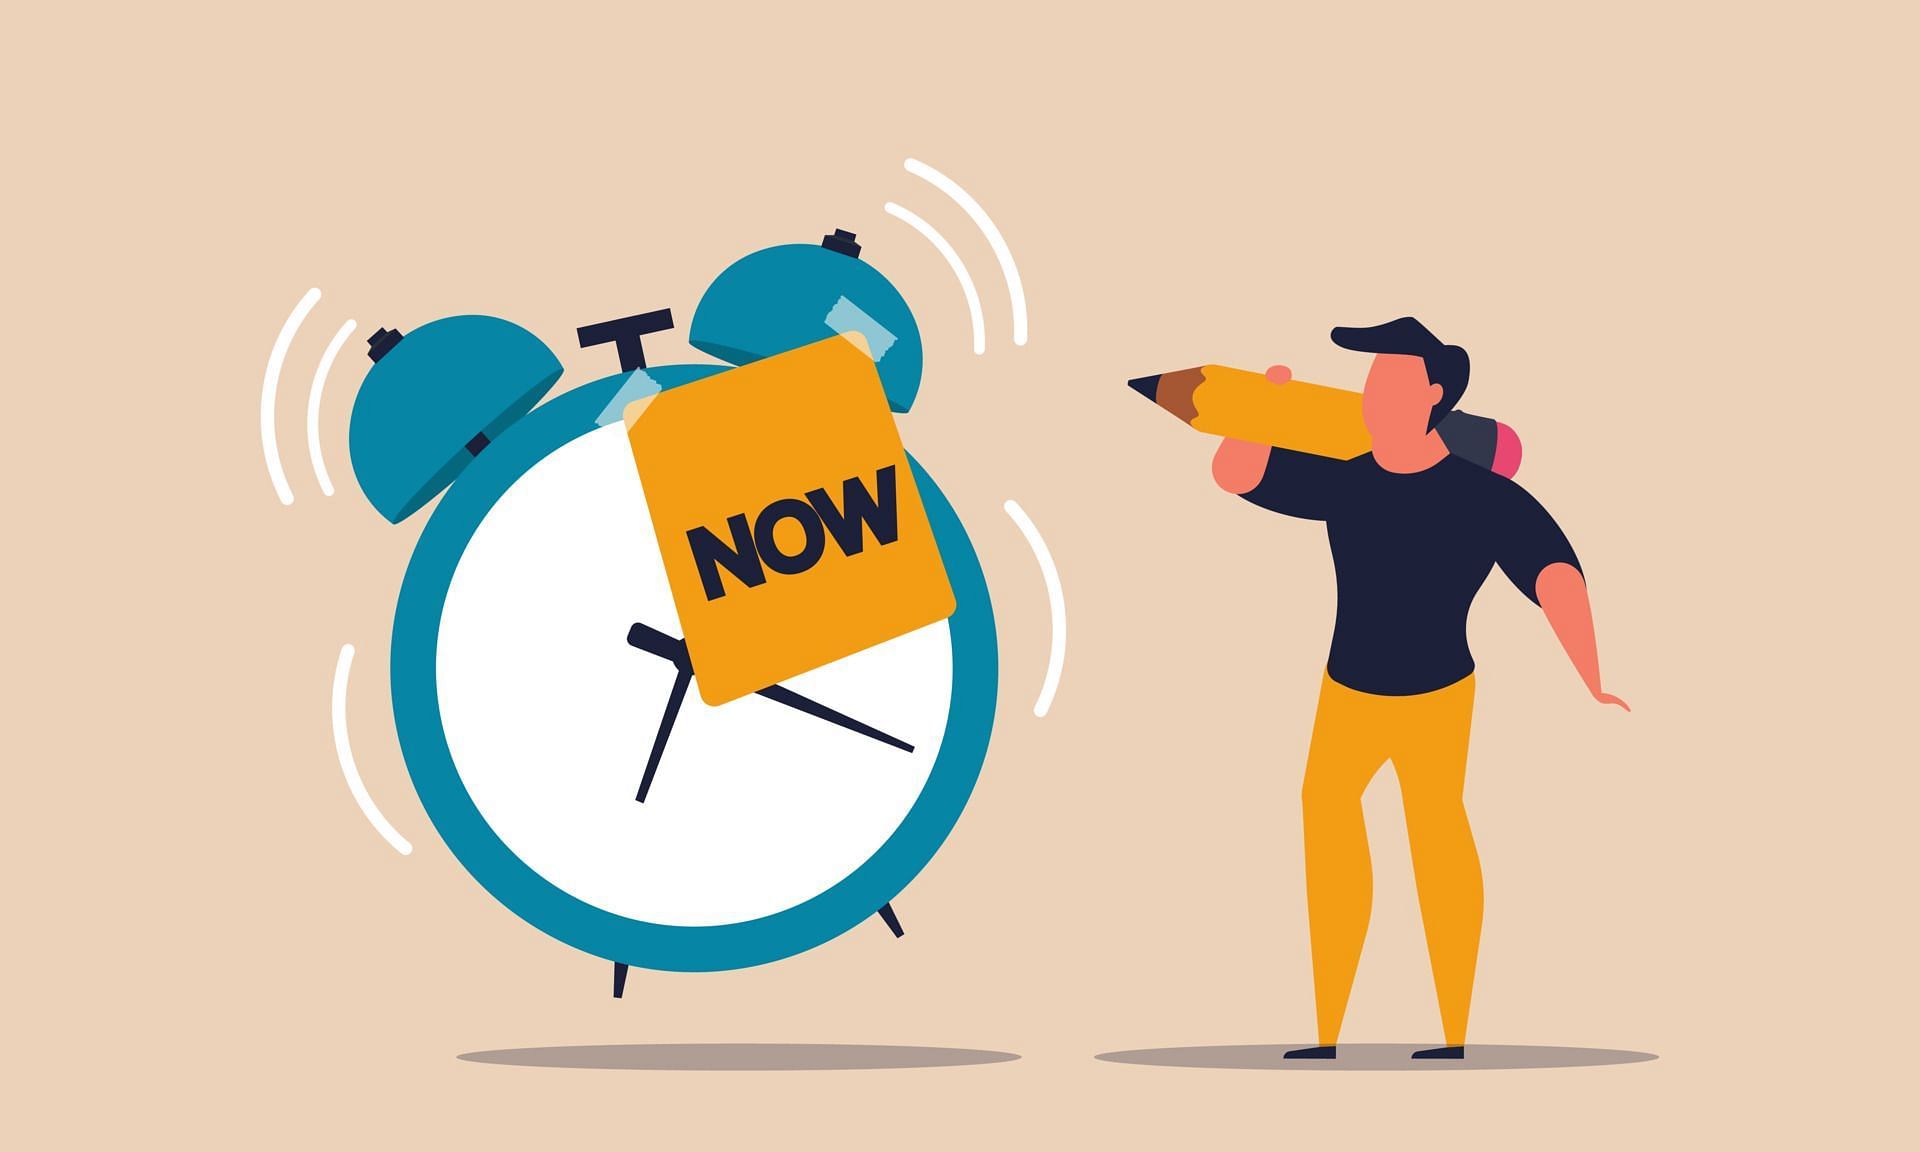 How do we start addressing the now instead of waiting on it? (Image via Vecteezy/ Vecteezy)